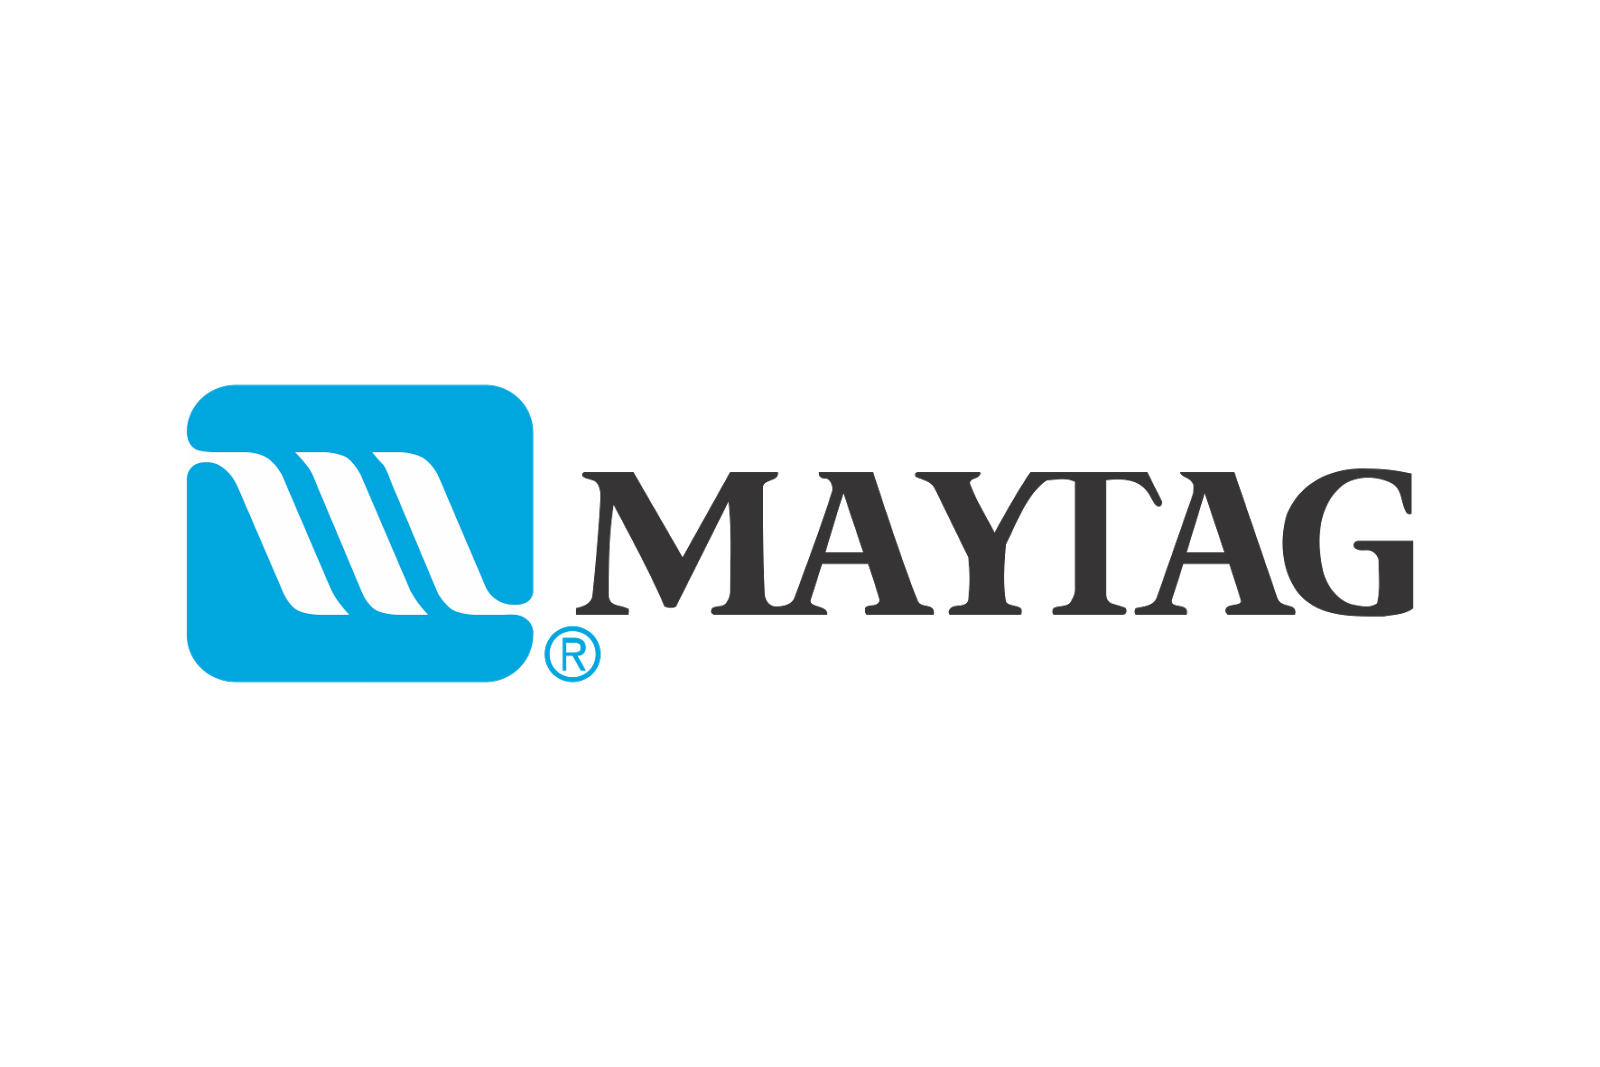 Maytag Logo - Image - Logo Maytag.png | Logopedia | FANDOM powered by Wikia